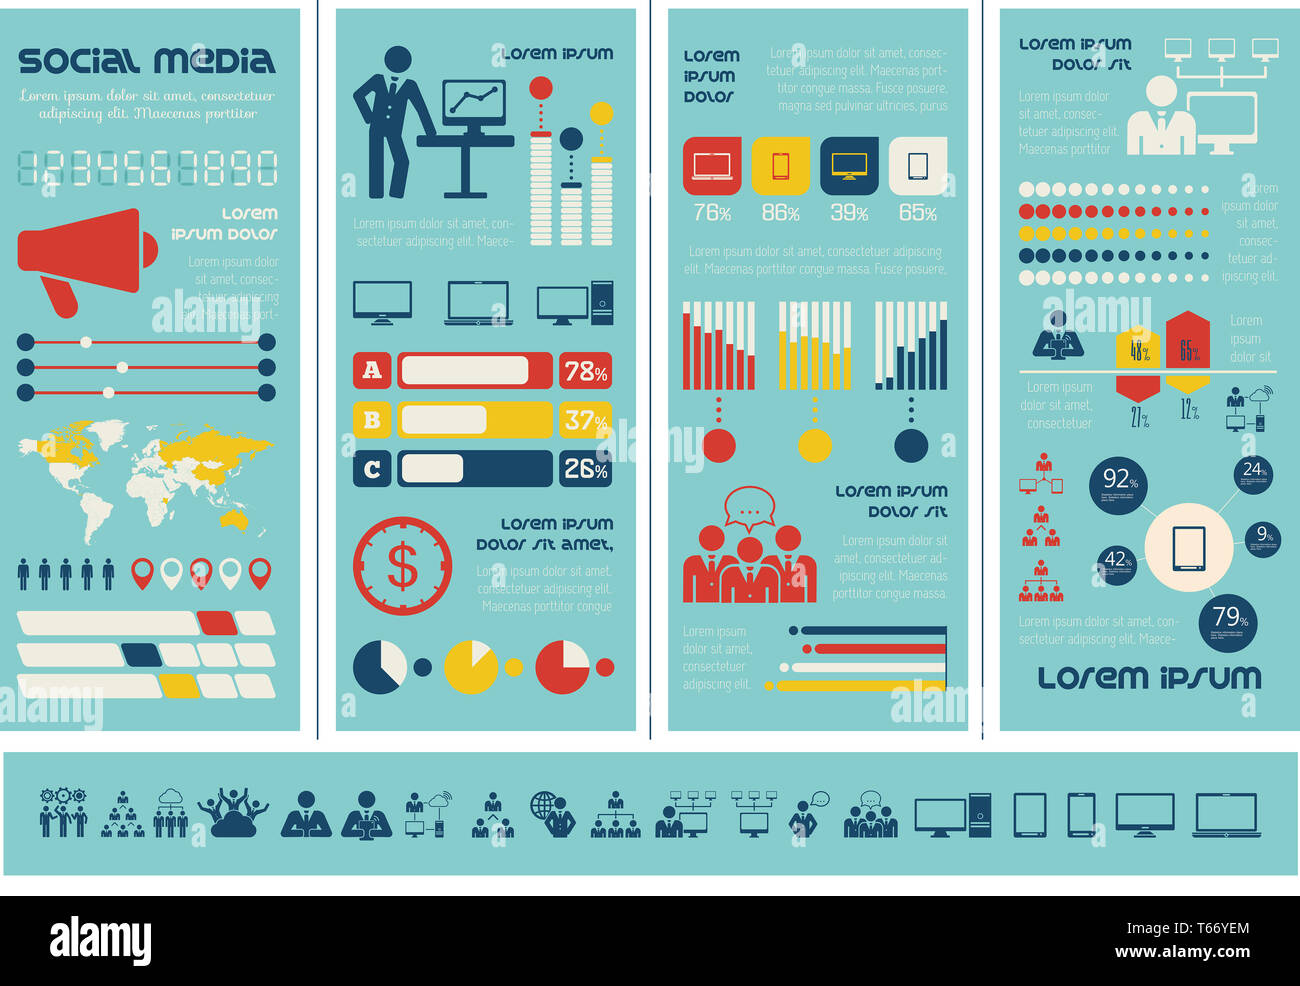 Social Media Infographic Template Stock Photo Alamy